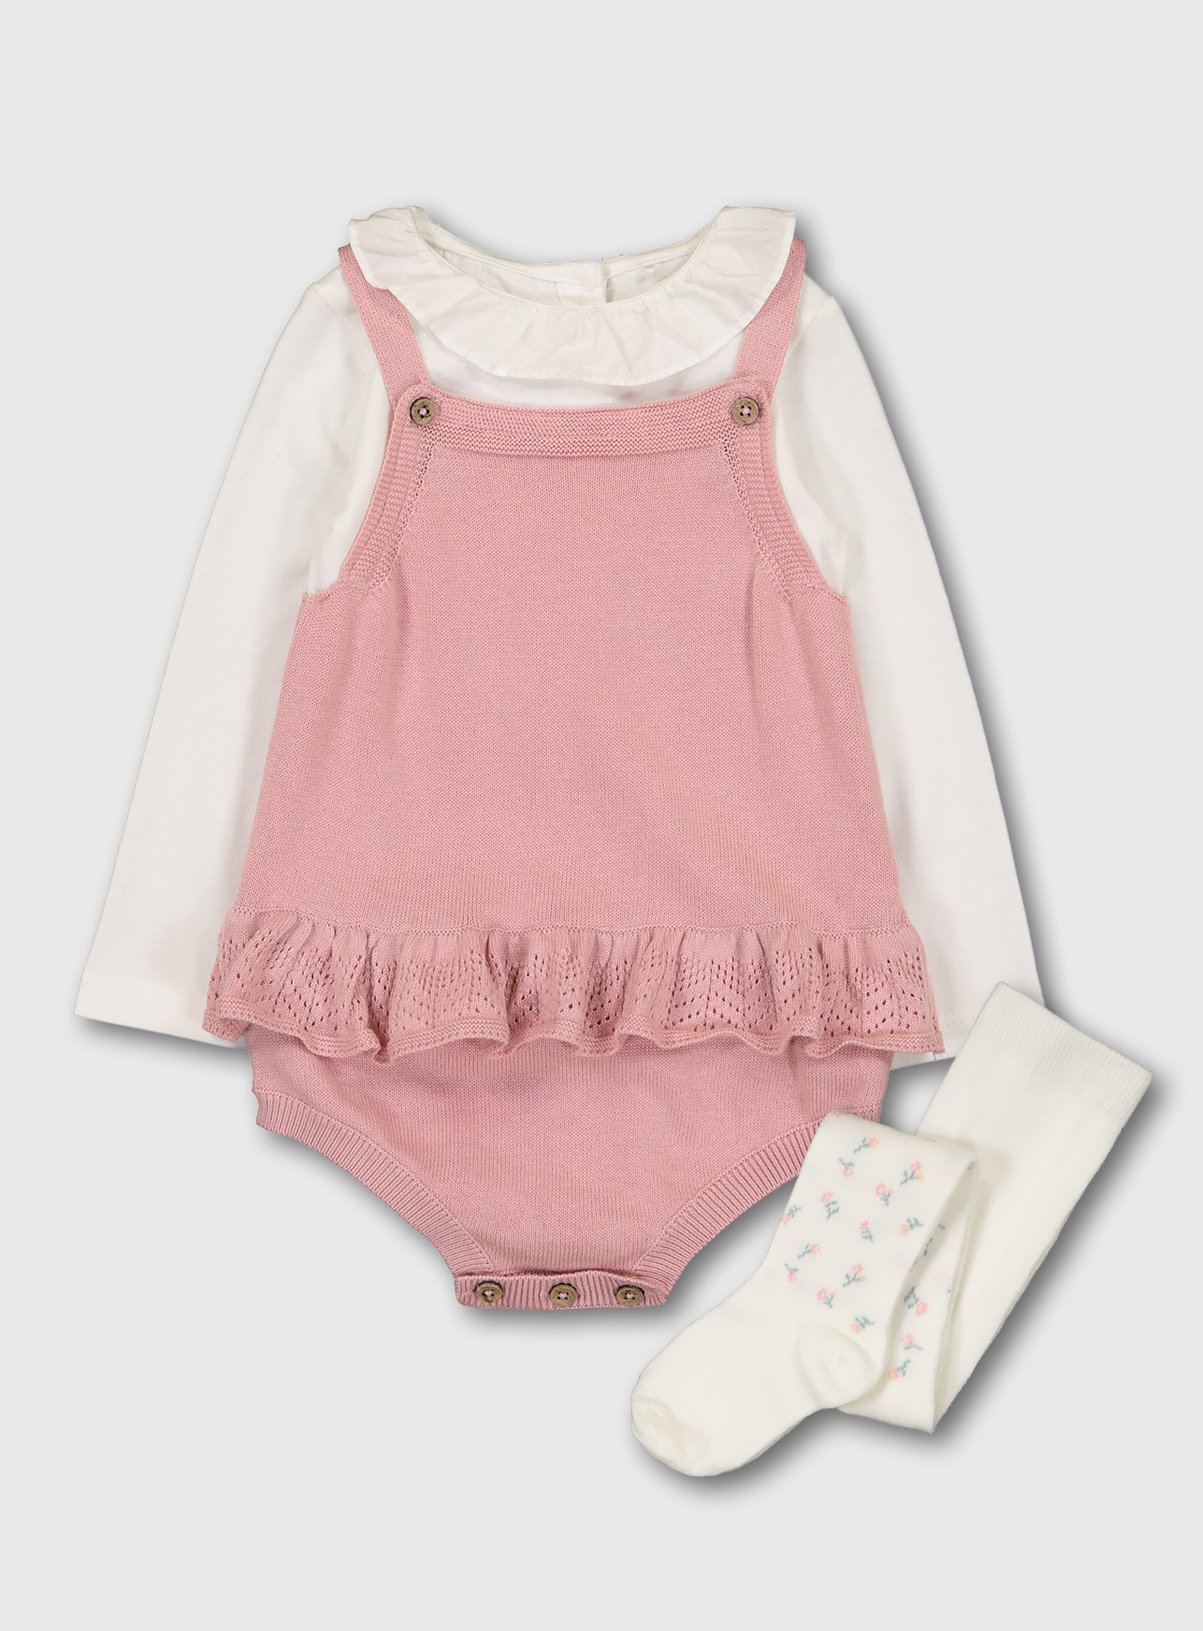 baby girl clothes sainsburys